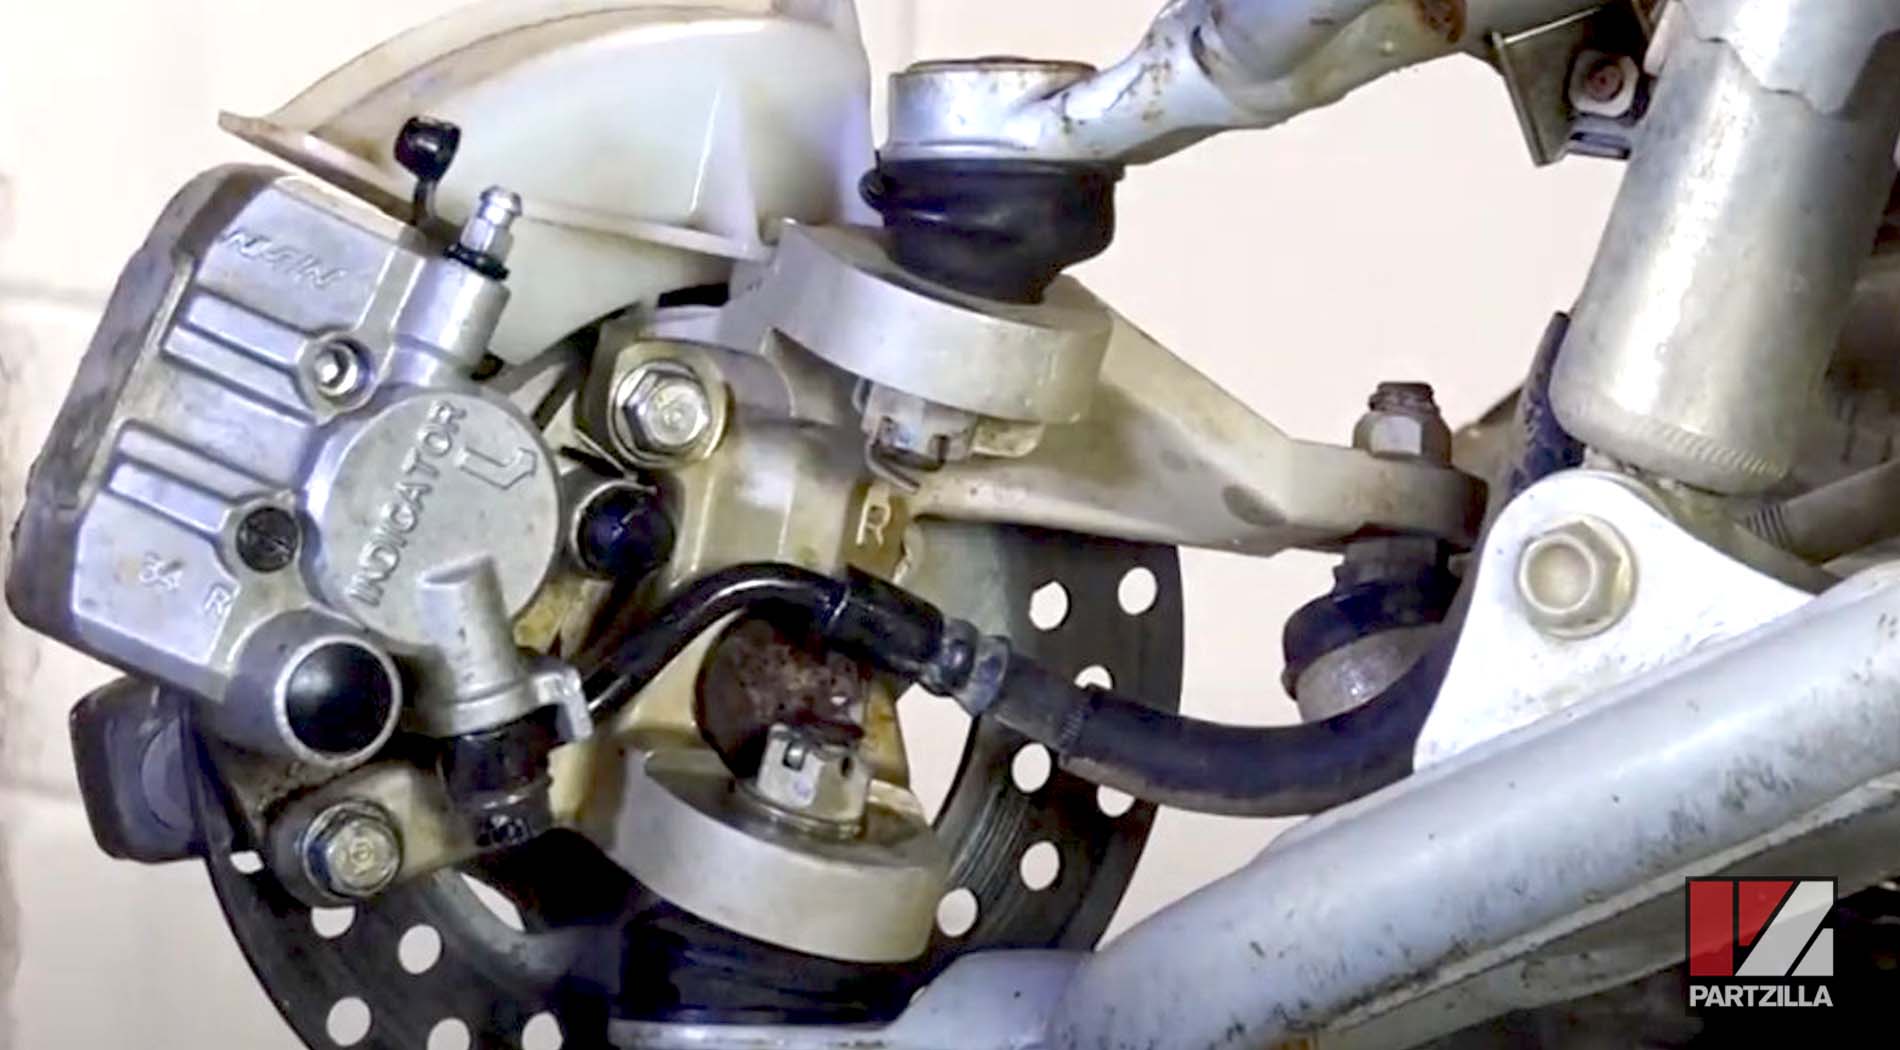 Honda TRX400 front brake caliper rebuild